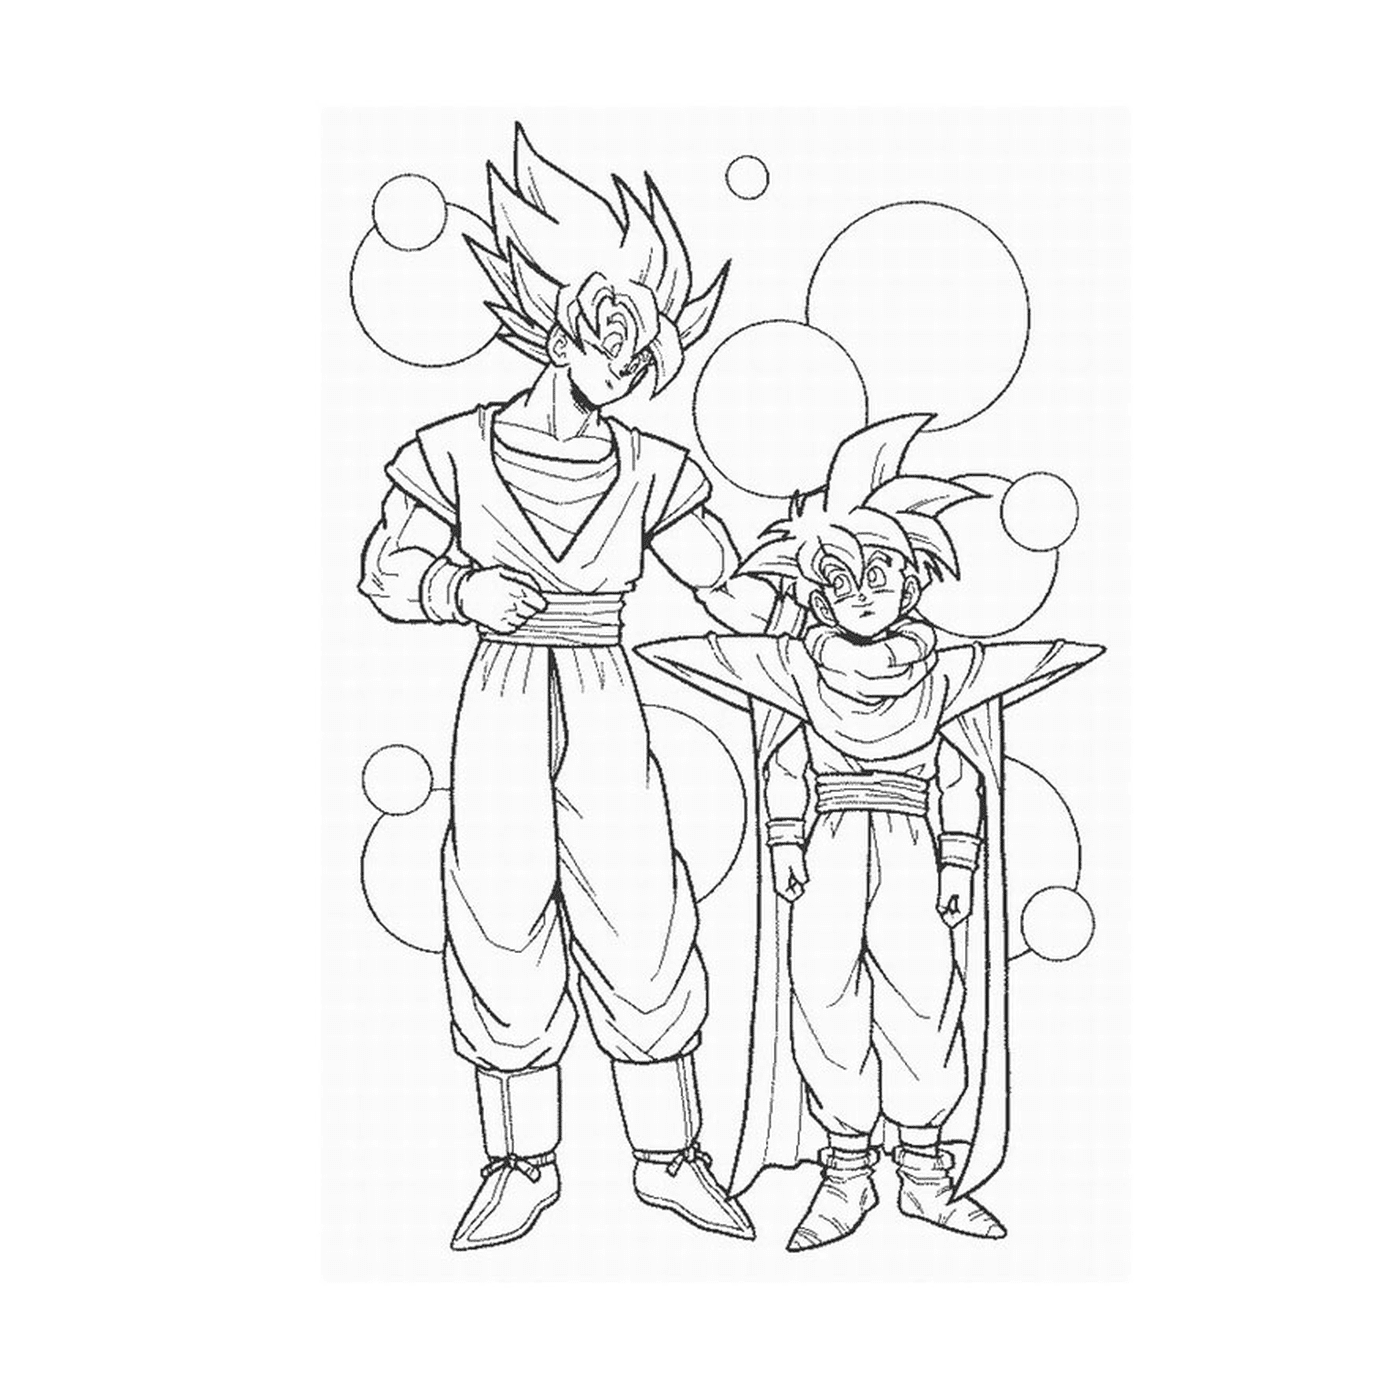  Goku e Vegeta, guerreiros poderosos 